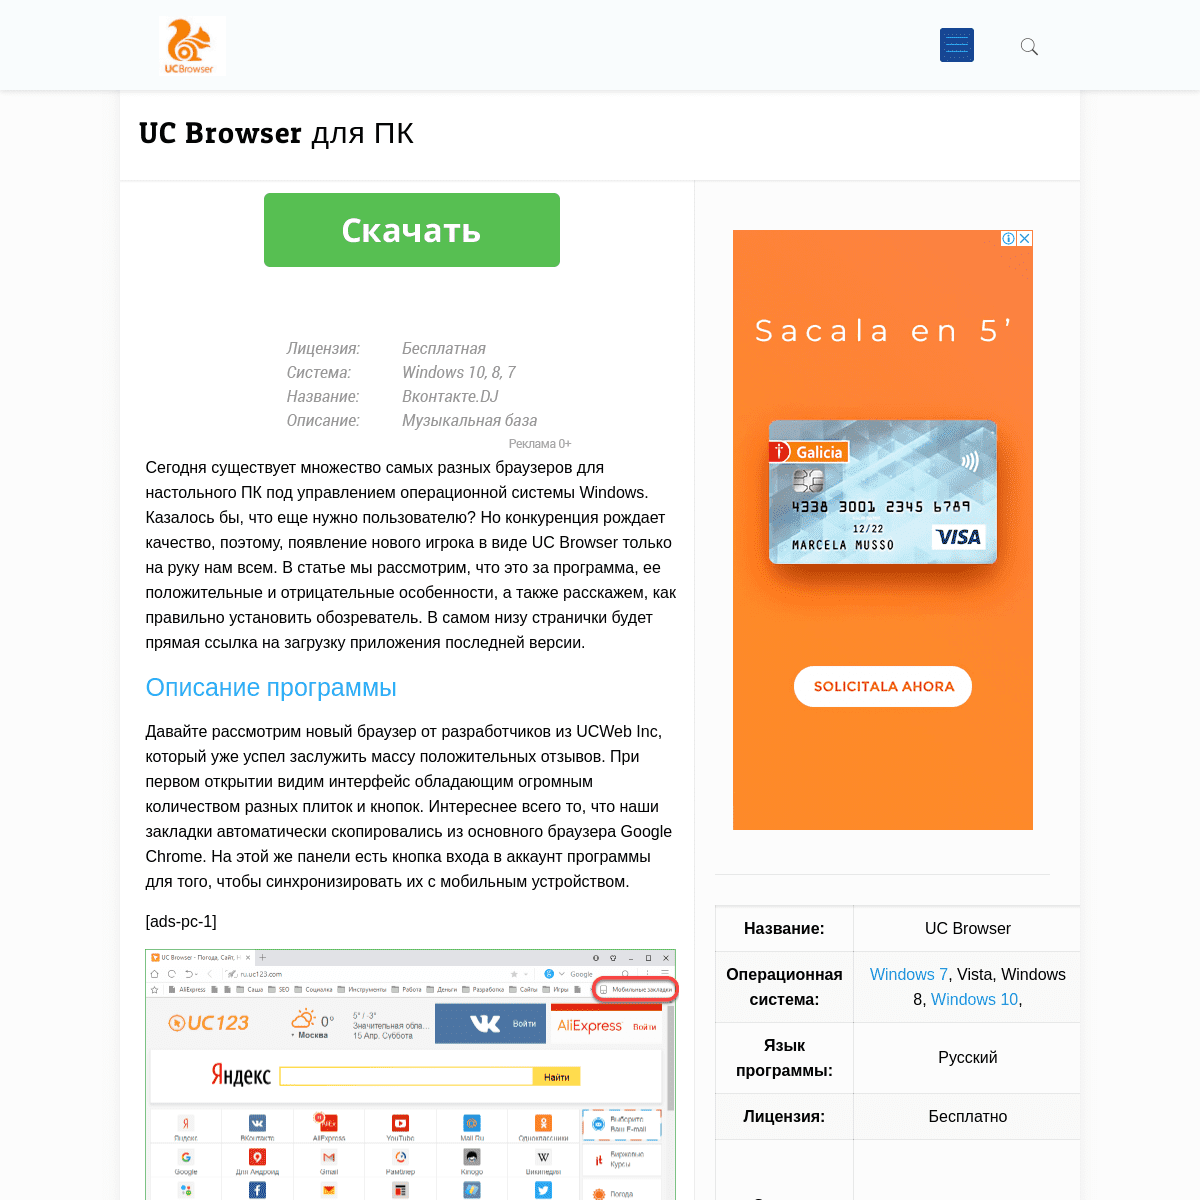 A complete backup of uc-browserus.ru